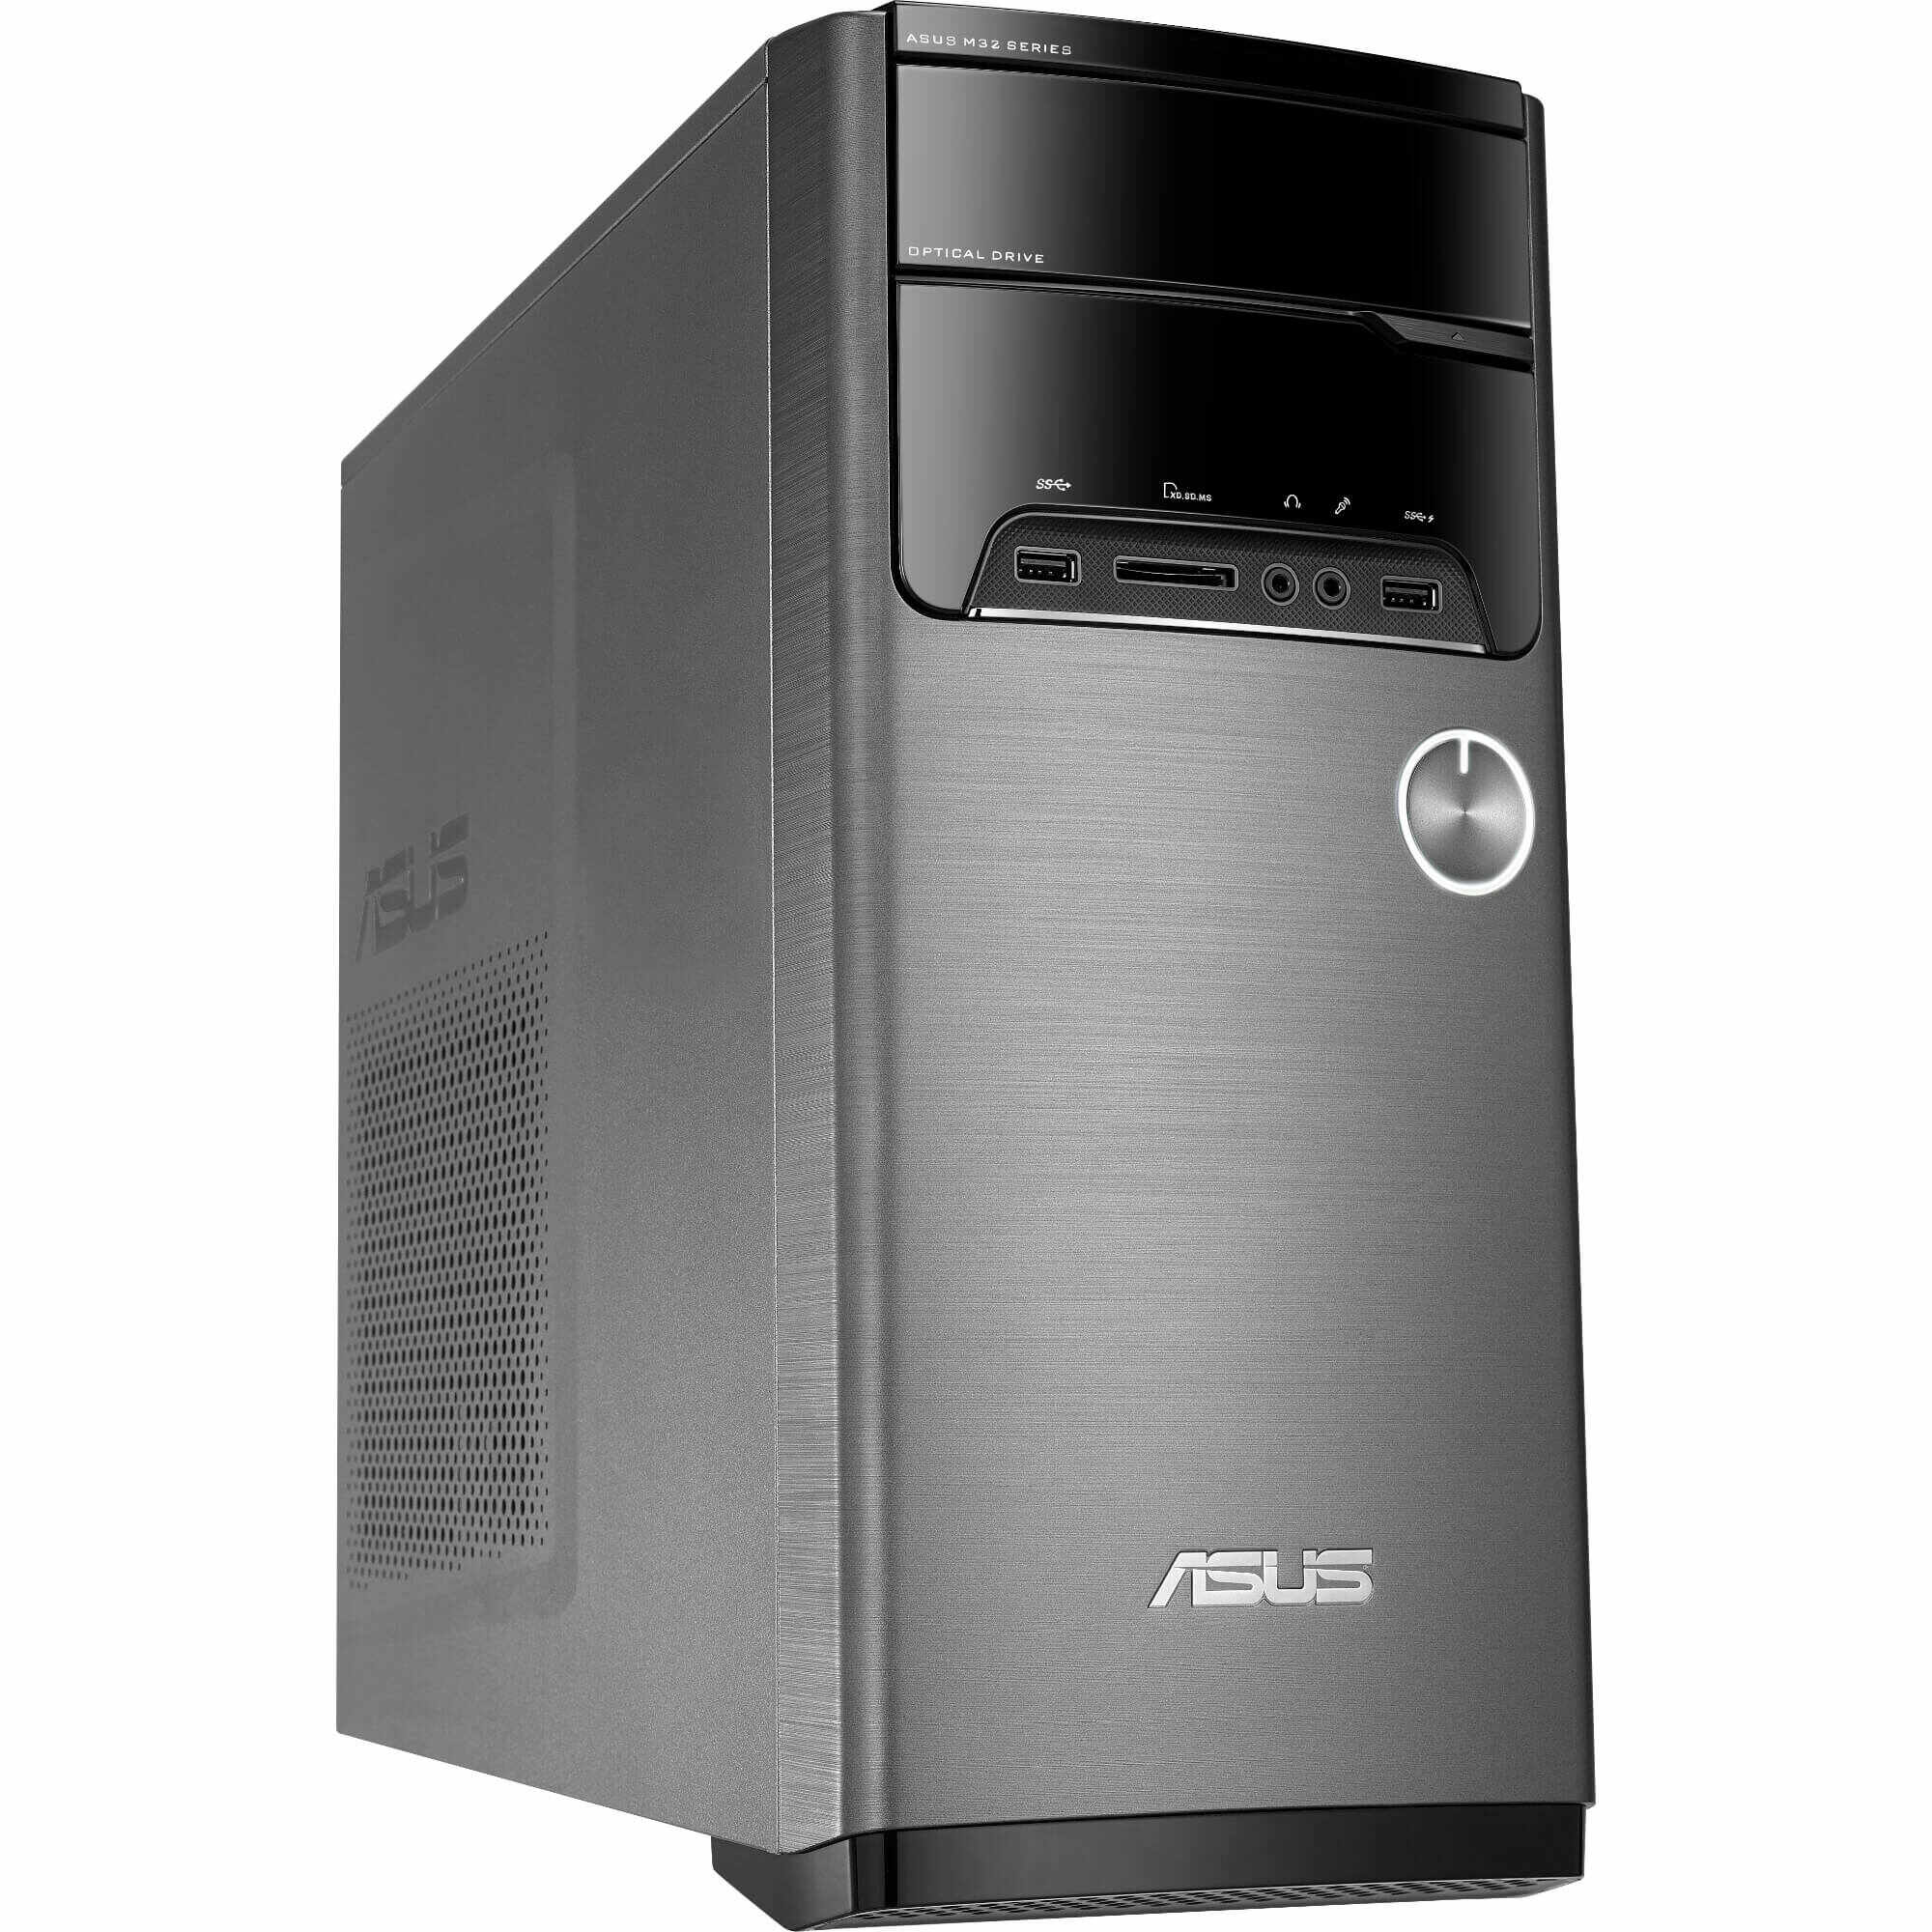 Sistem Desktop PC Asus M32CD-K-RO014D Intel Core i3-7100, 4GB DDR4, HDD 1TB, nVidia GT 730 2GB, Free DOS